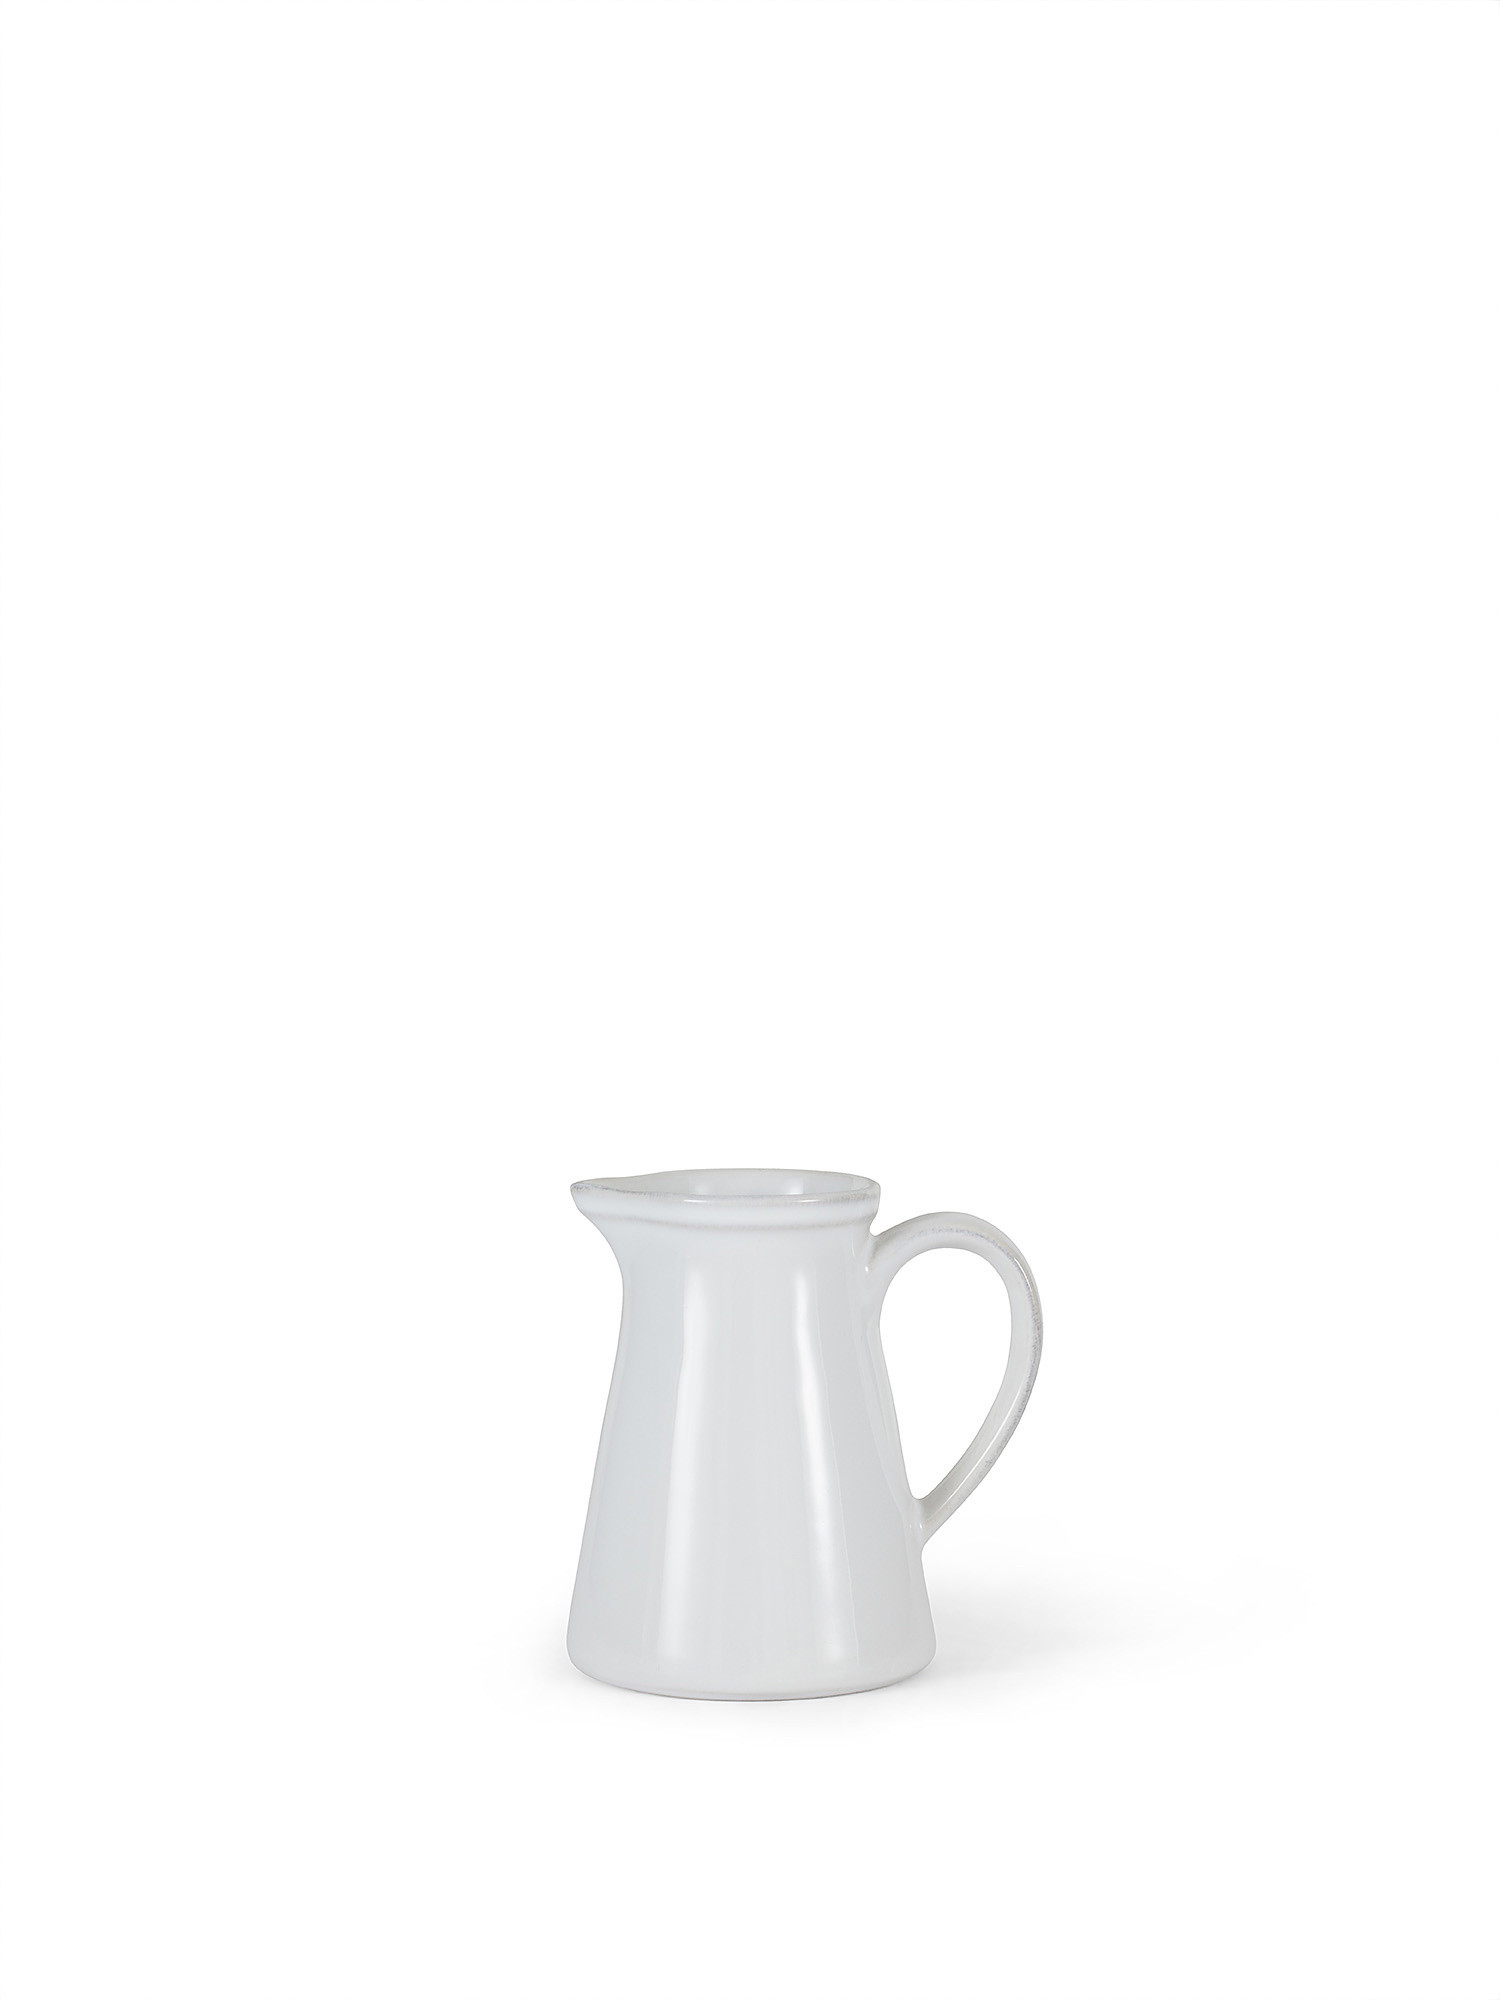 Lattiera ceramica Friso, Bianco, large image number 0